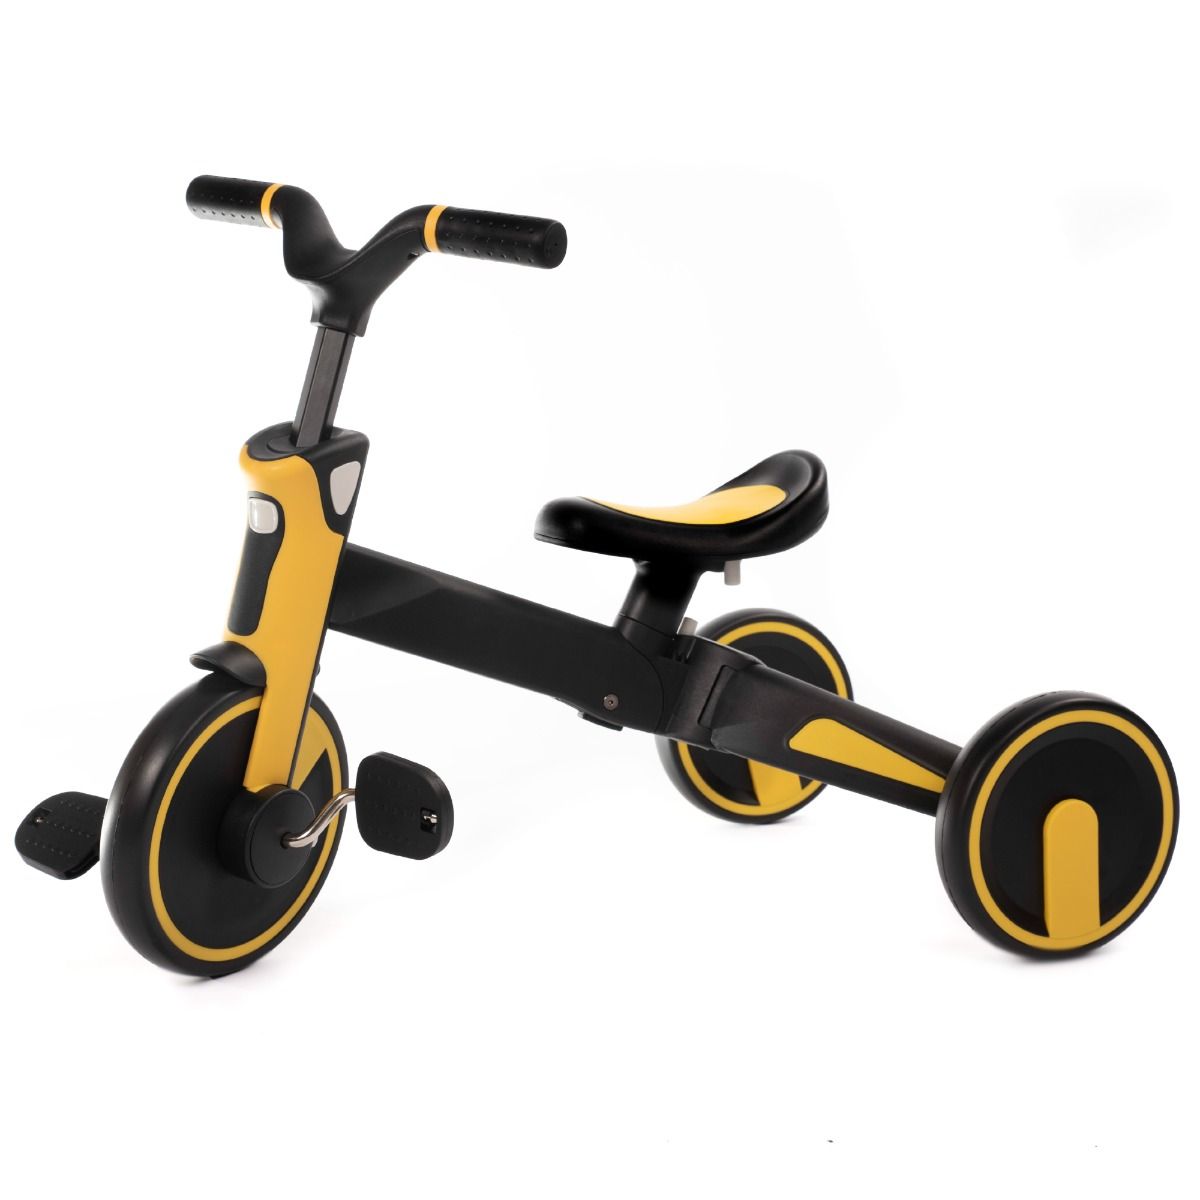 Tricicleta pliabila 3 in 1 pentru copii, Yellow, UoniBaby